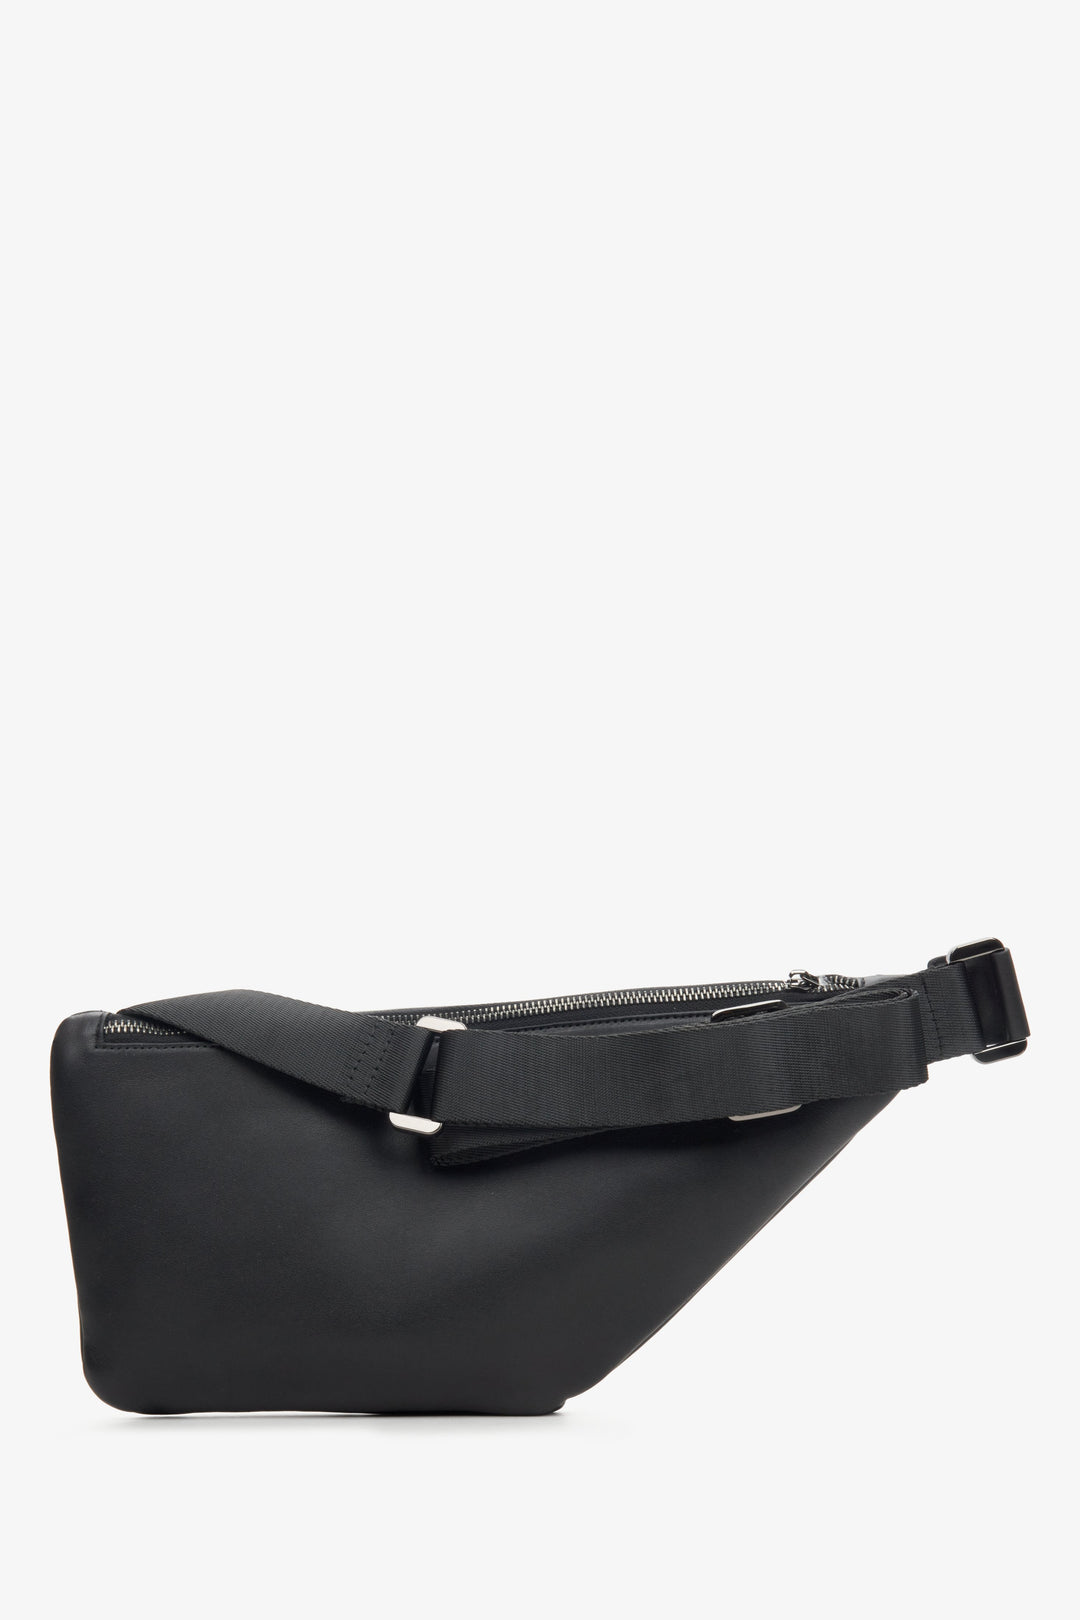 Men's black leather waist bag by Estro - reverse side.